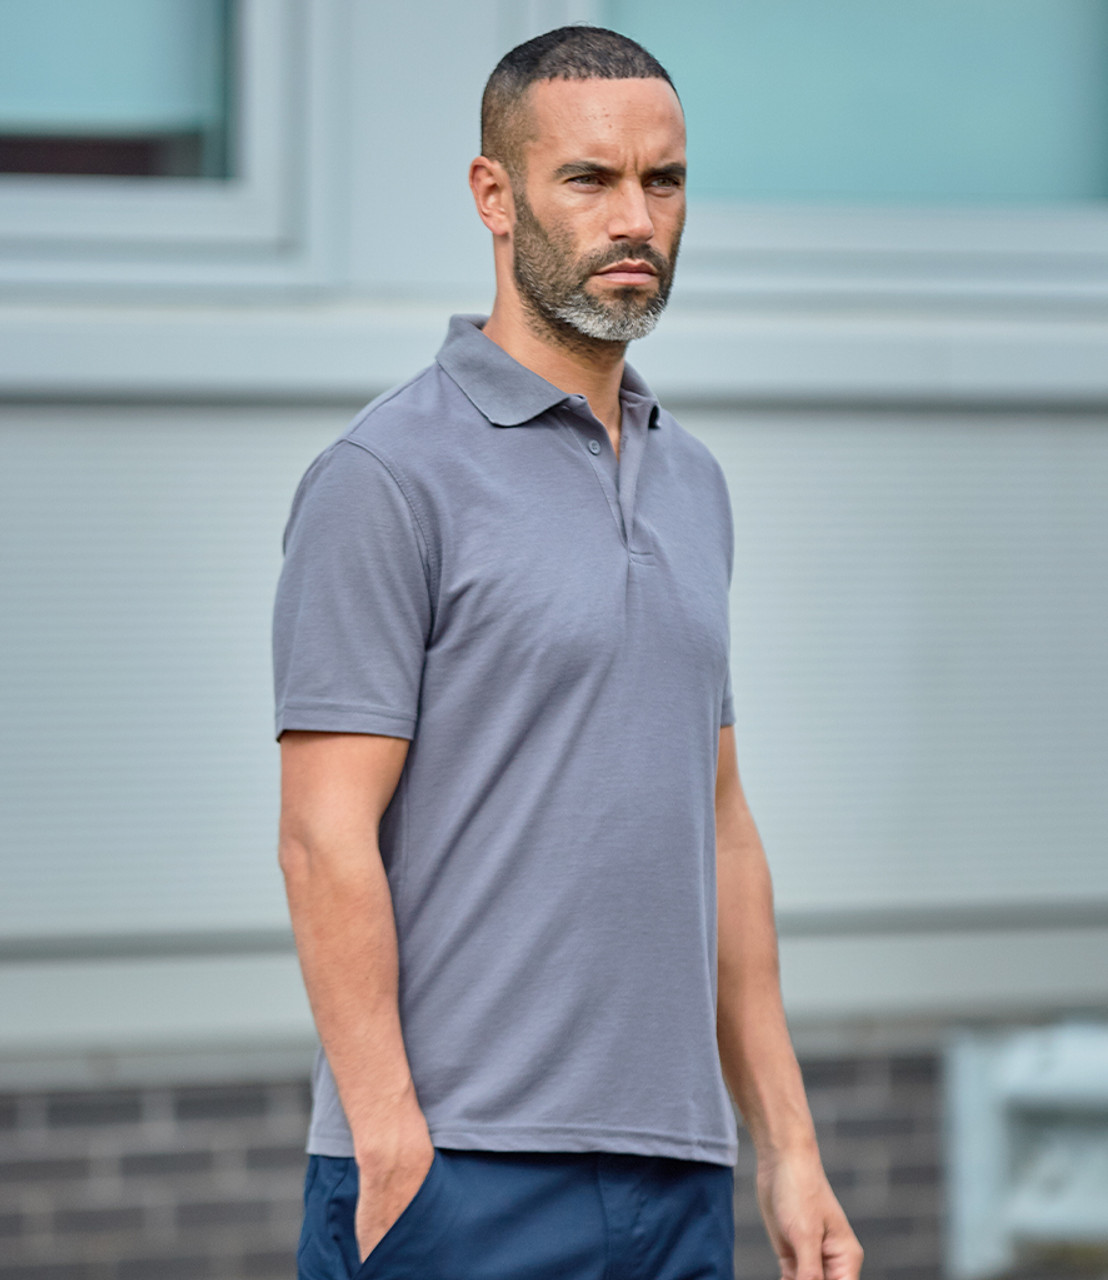 Short sleeve piqué polo shirt in a regular fit made of organic